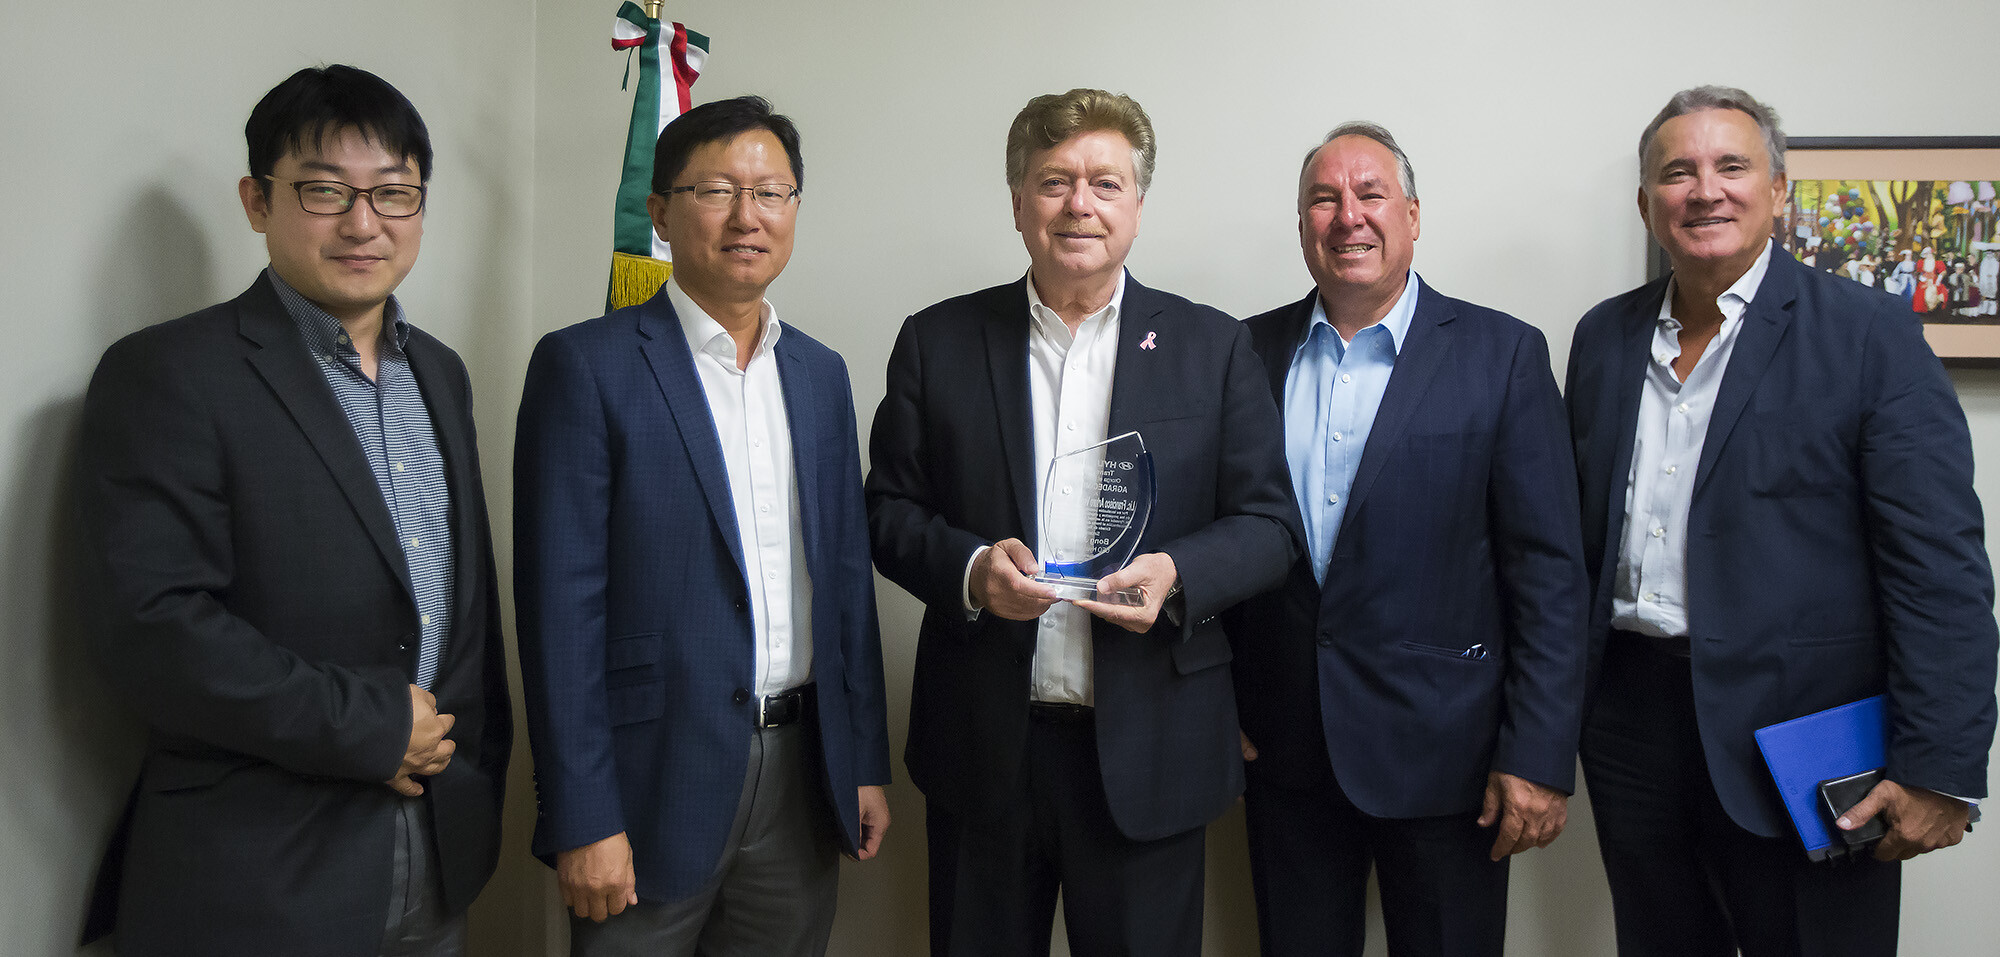 Hyundai entrega reconocimiento al gobernador “Kiko” Vega